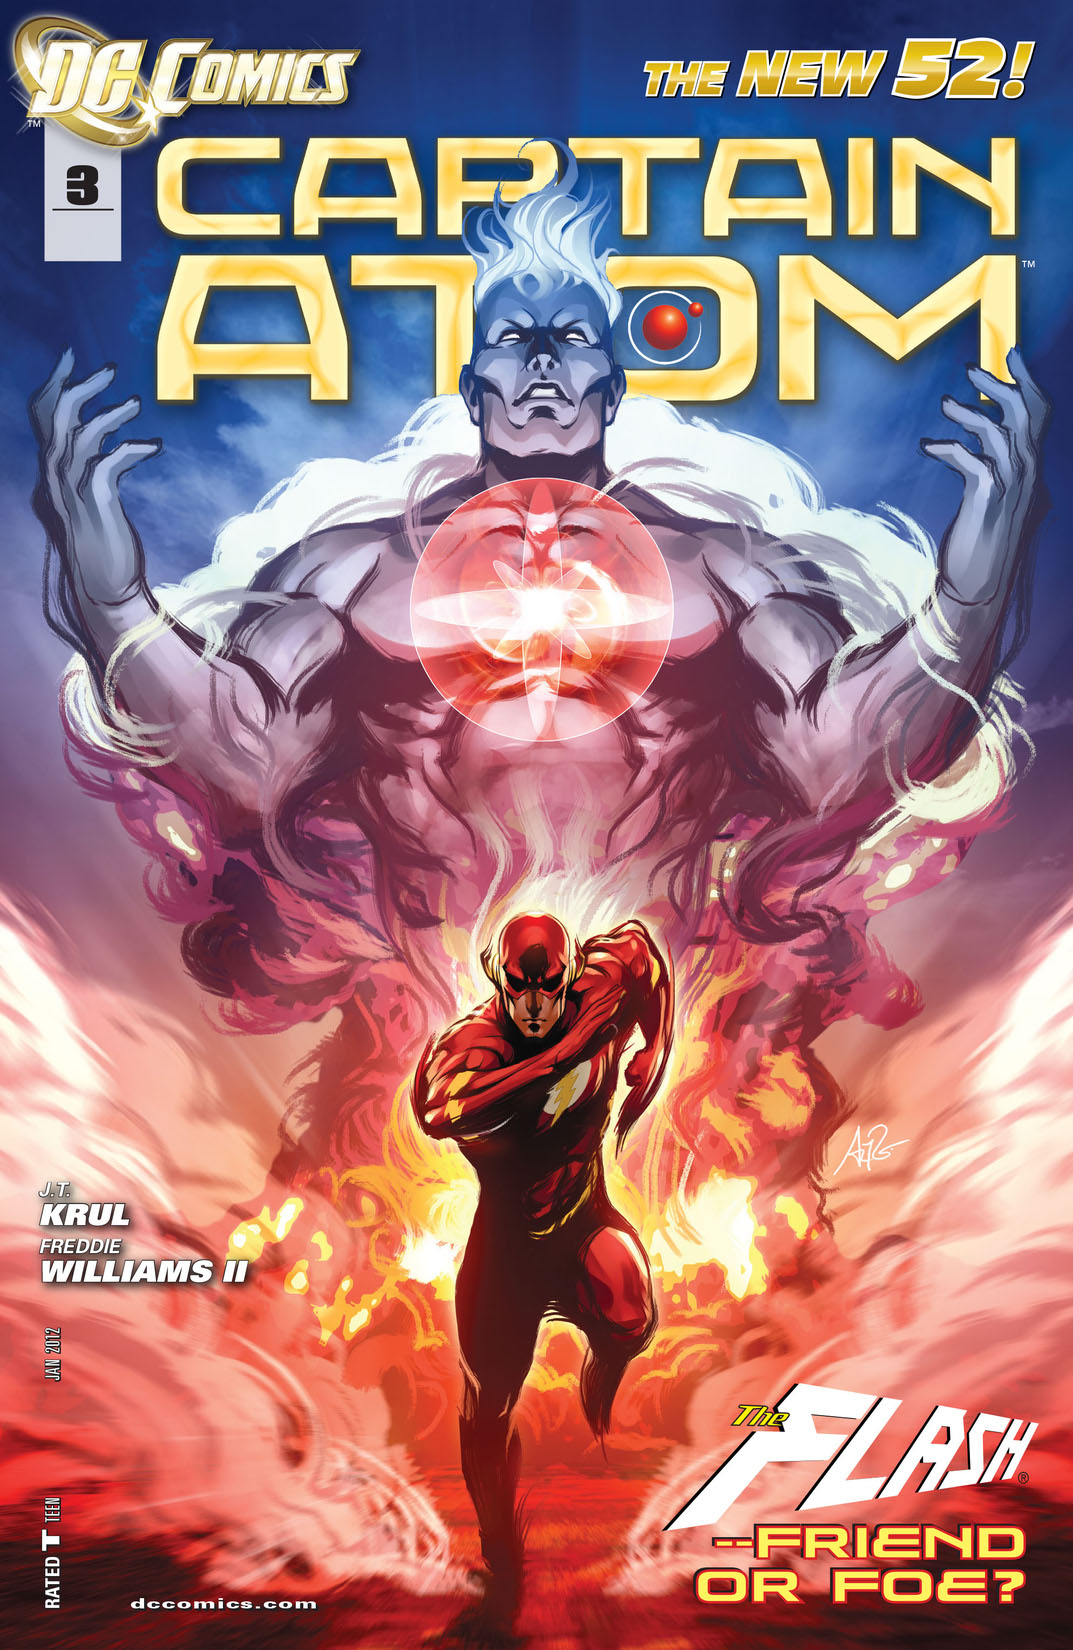 Captain Atom (2011-) #3 preview images